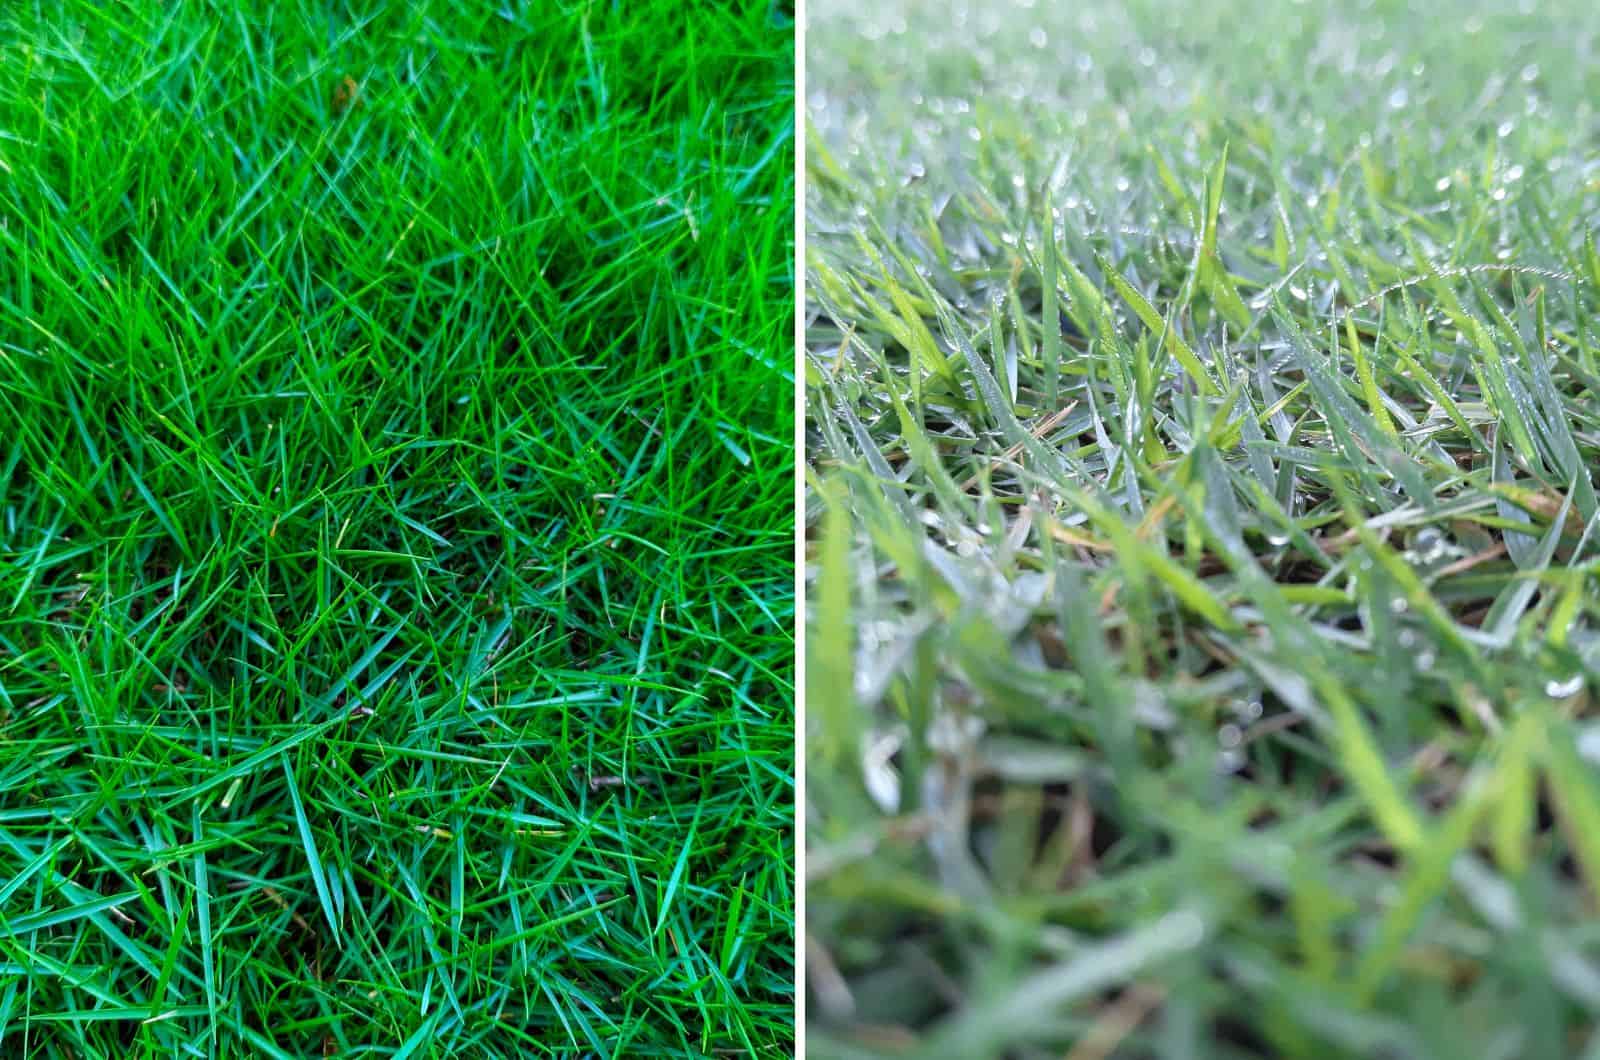 Zoysia and Bermuda grass photos